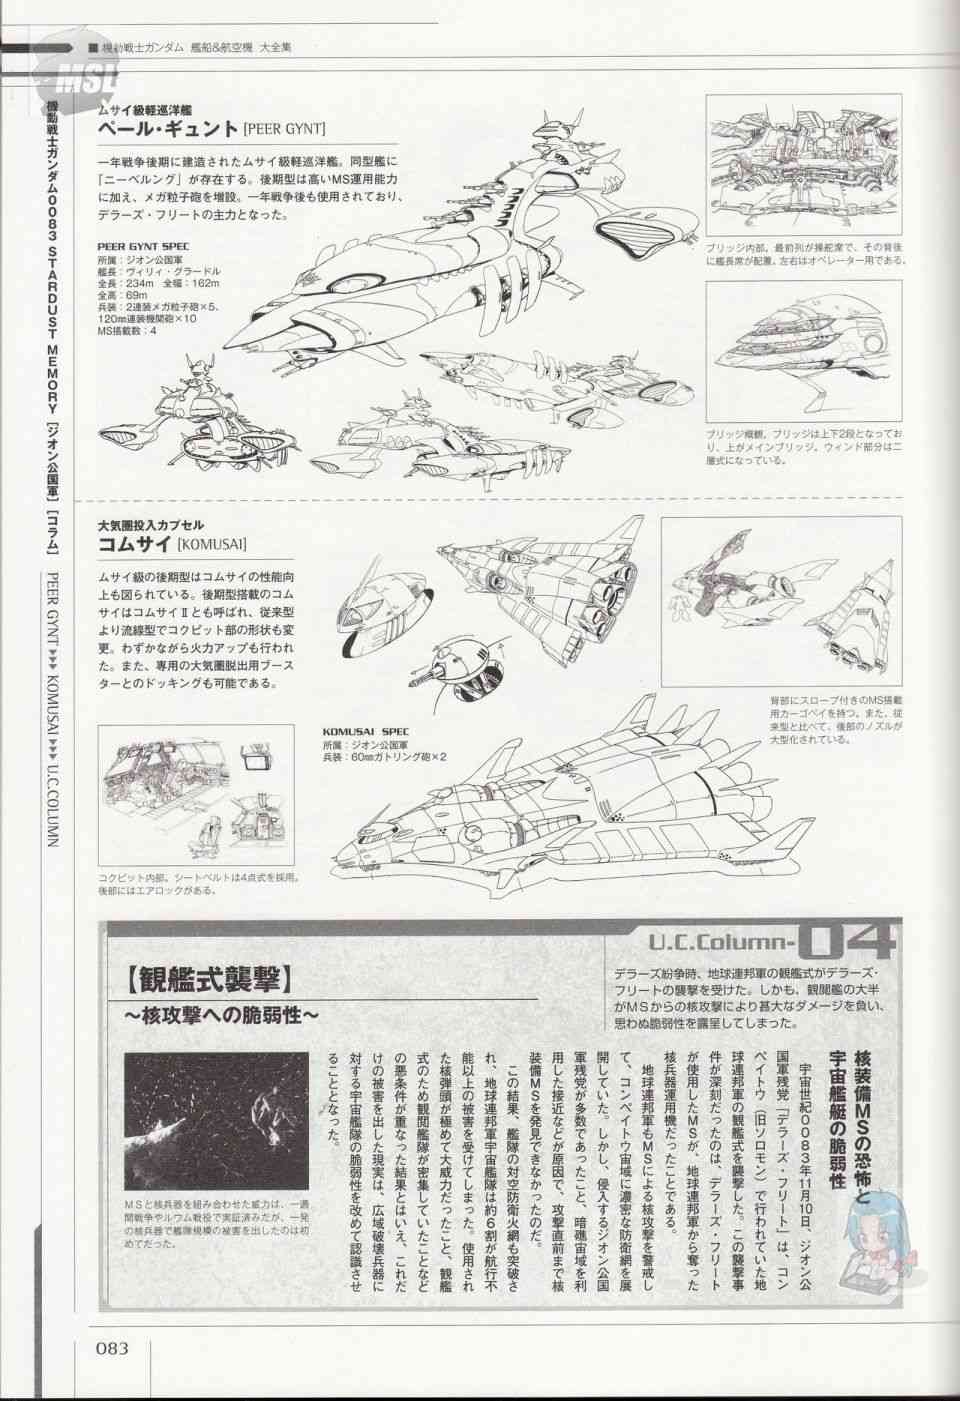 Mobile Suit Gundam - Ship amp; Aerospace Plane Encyclopedia - 1話(2/4) - 1